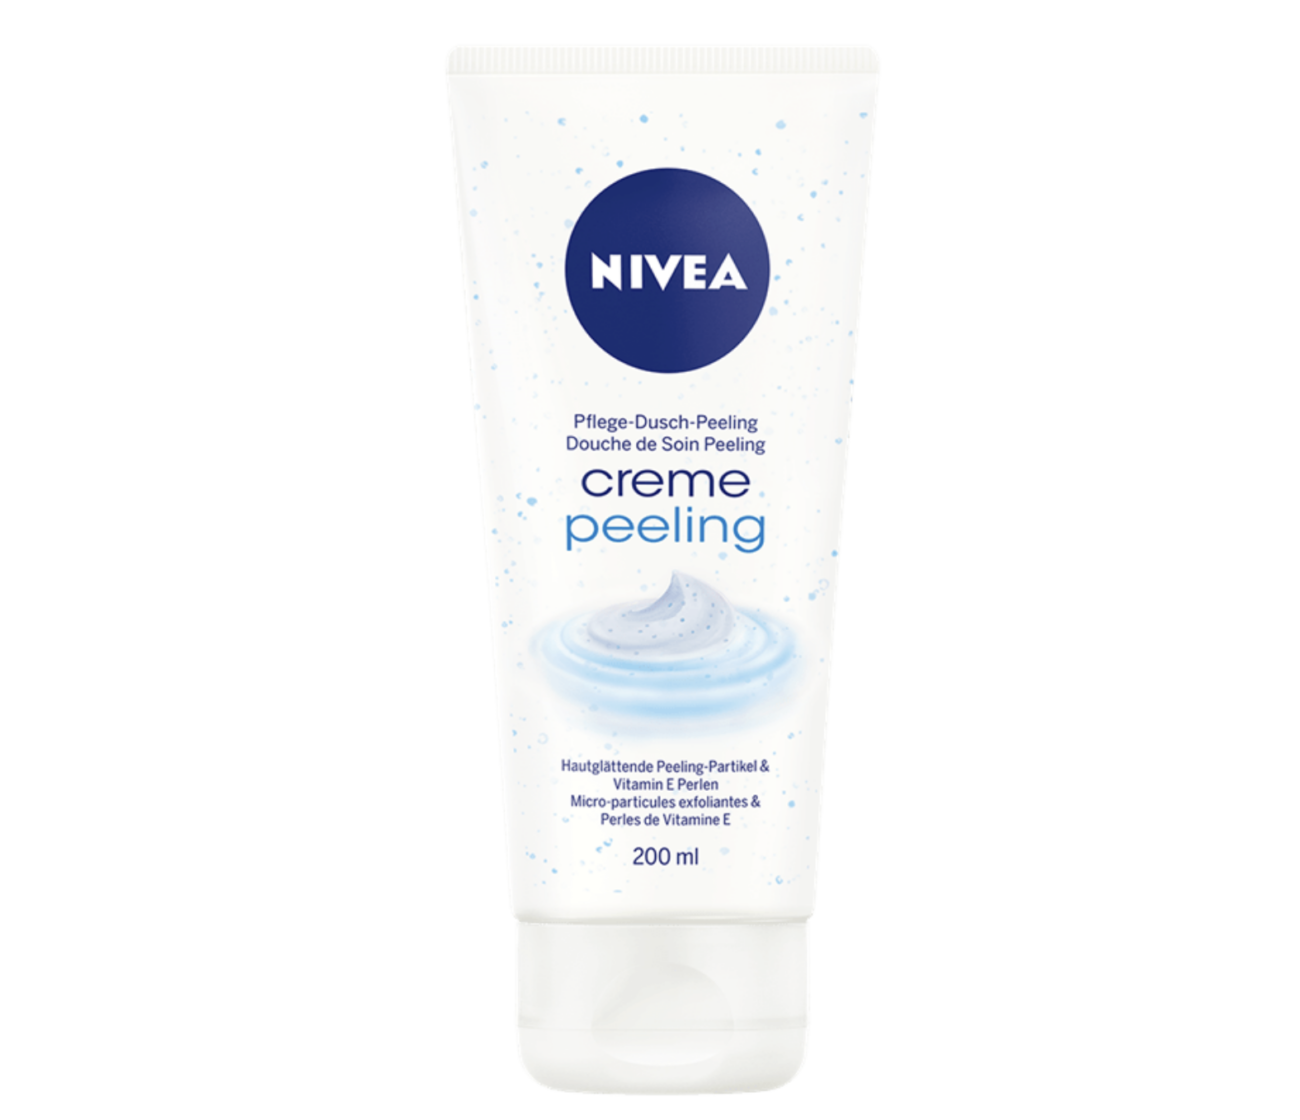 Creme Peeling Nivea Top Tipps Straffe Haut am Körper